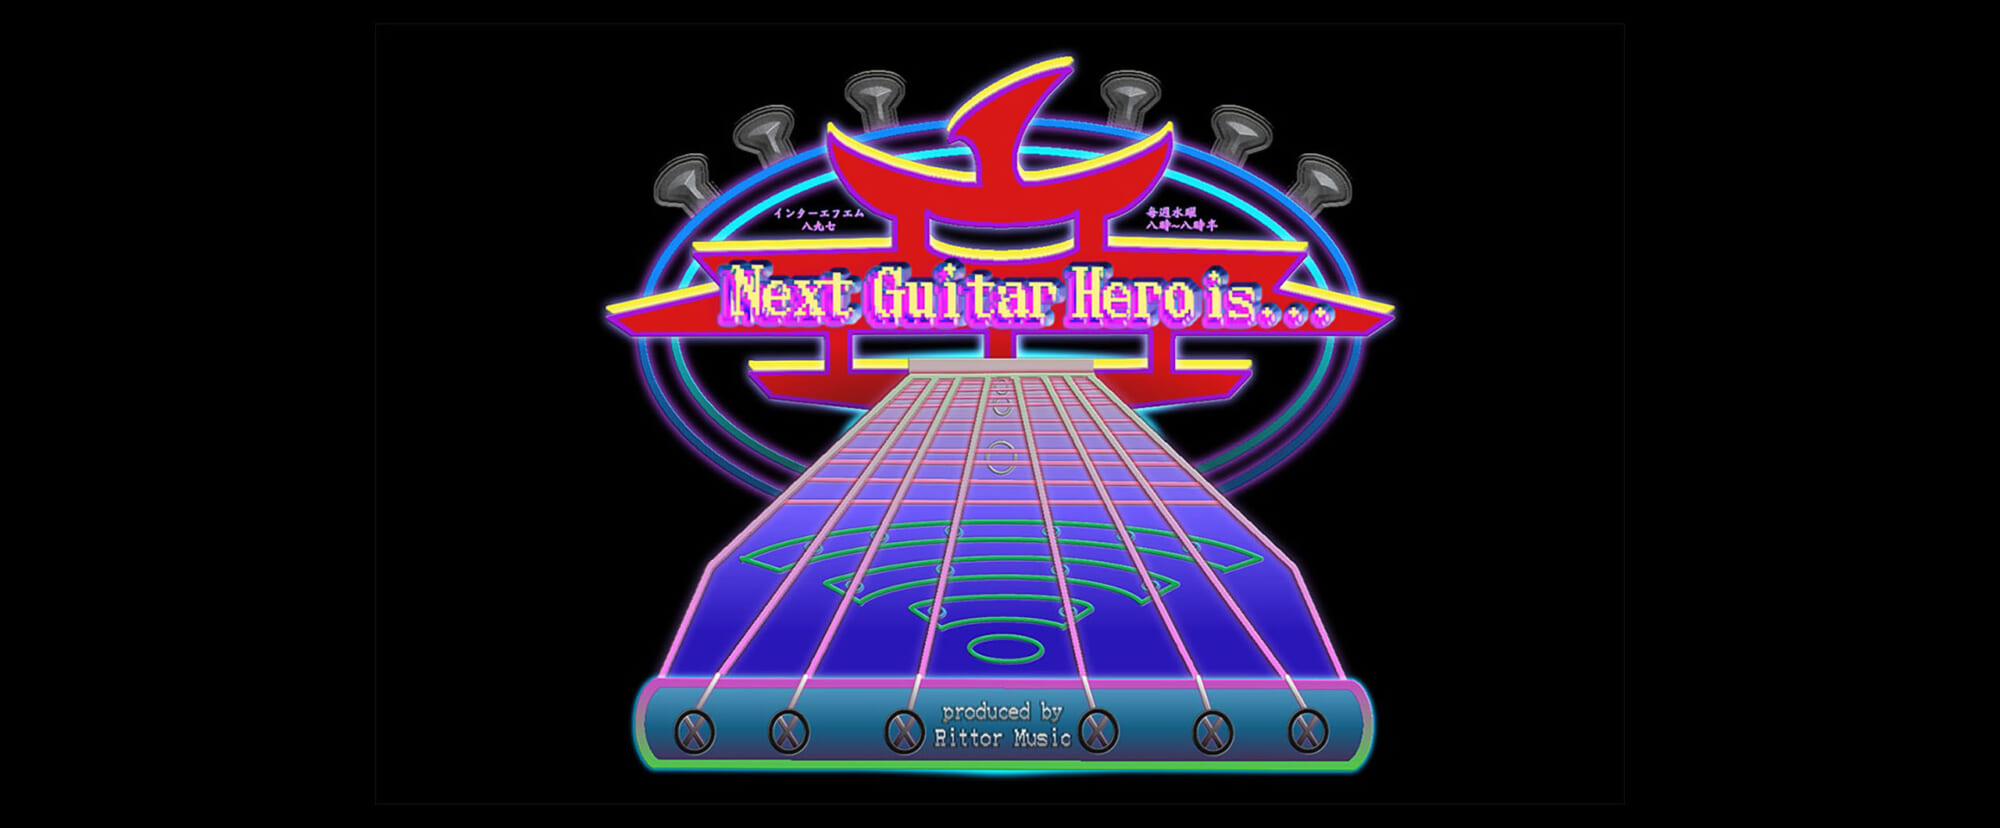 Reiと竹内アンナが語る「次世代のギタリスト像」／『Next Guitar Hero is…』今週の放送内容